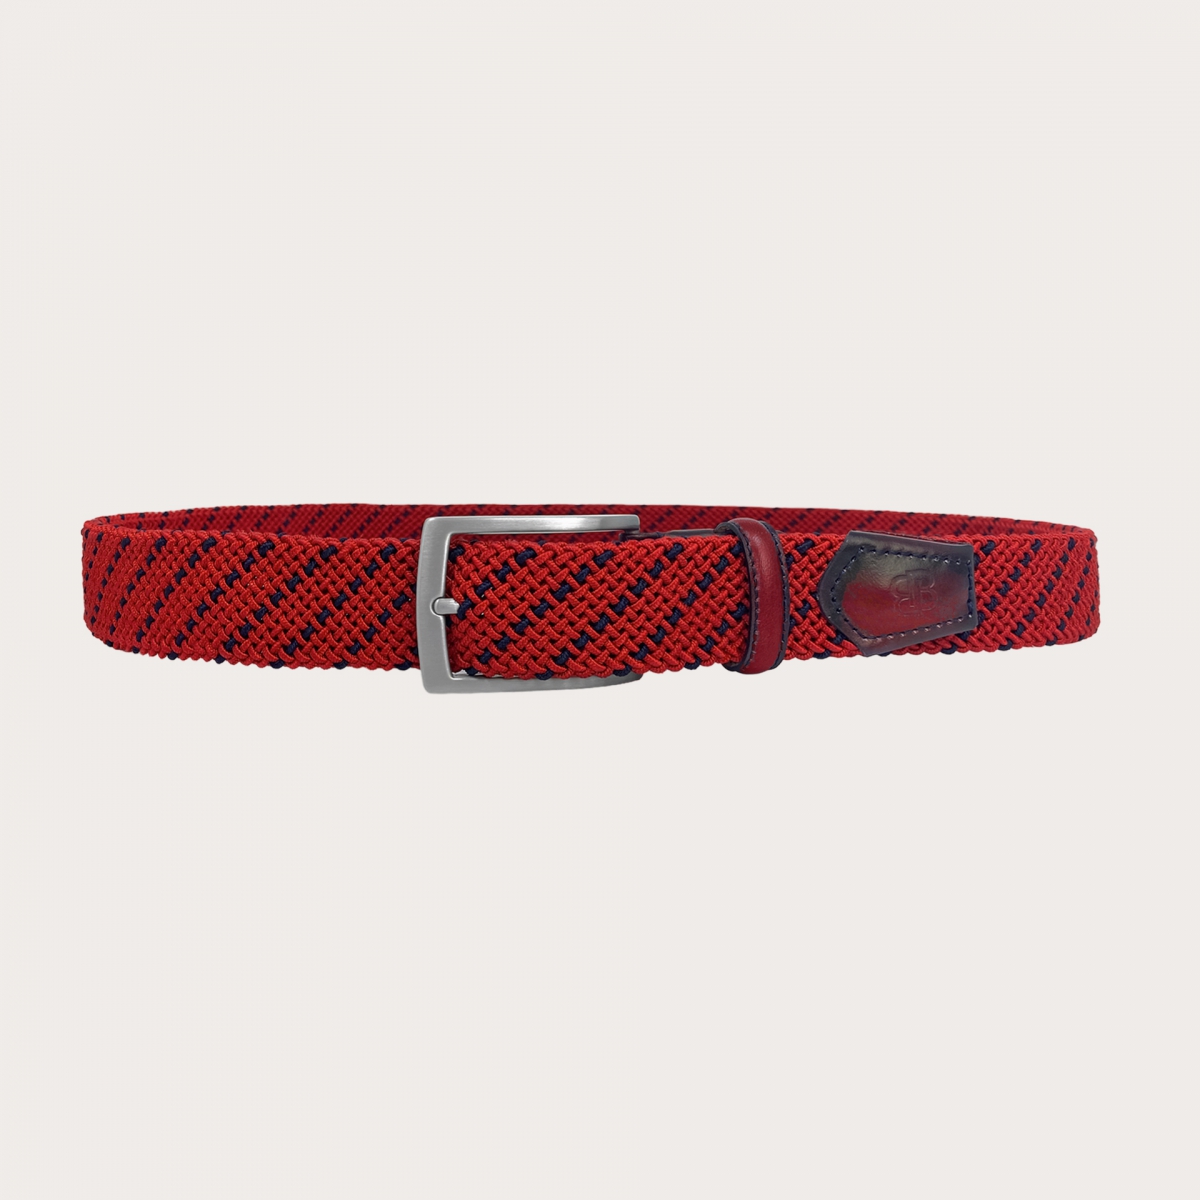 BRUCLE Braided elastic belt red and blue, nickel free